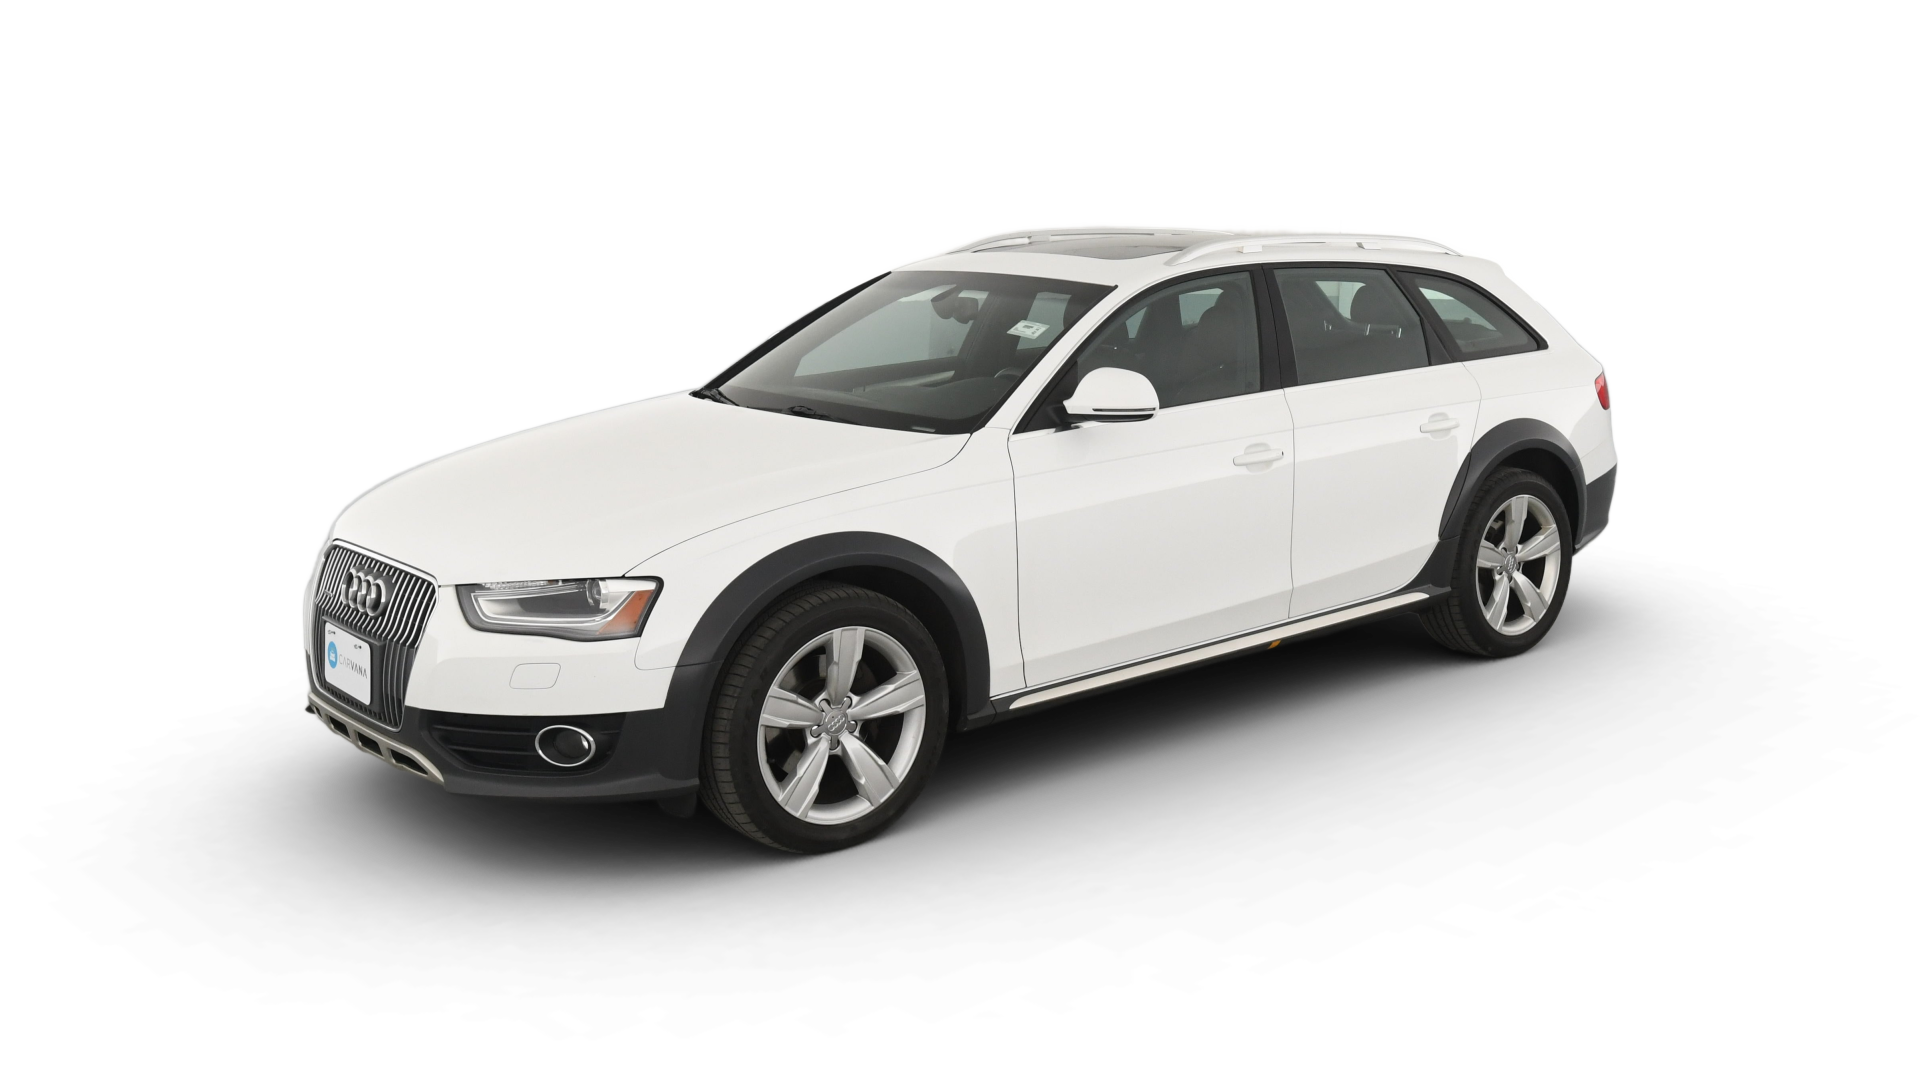 Audi allroad model image.